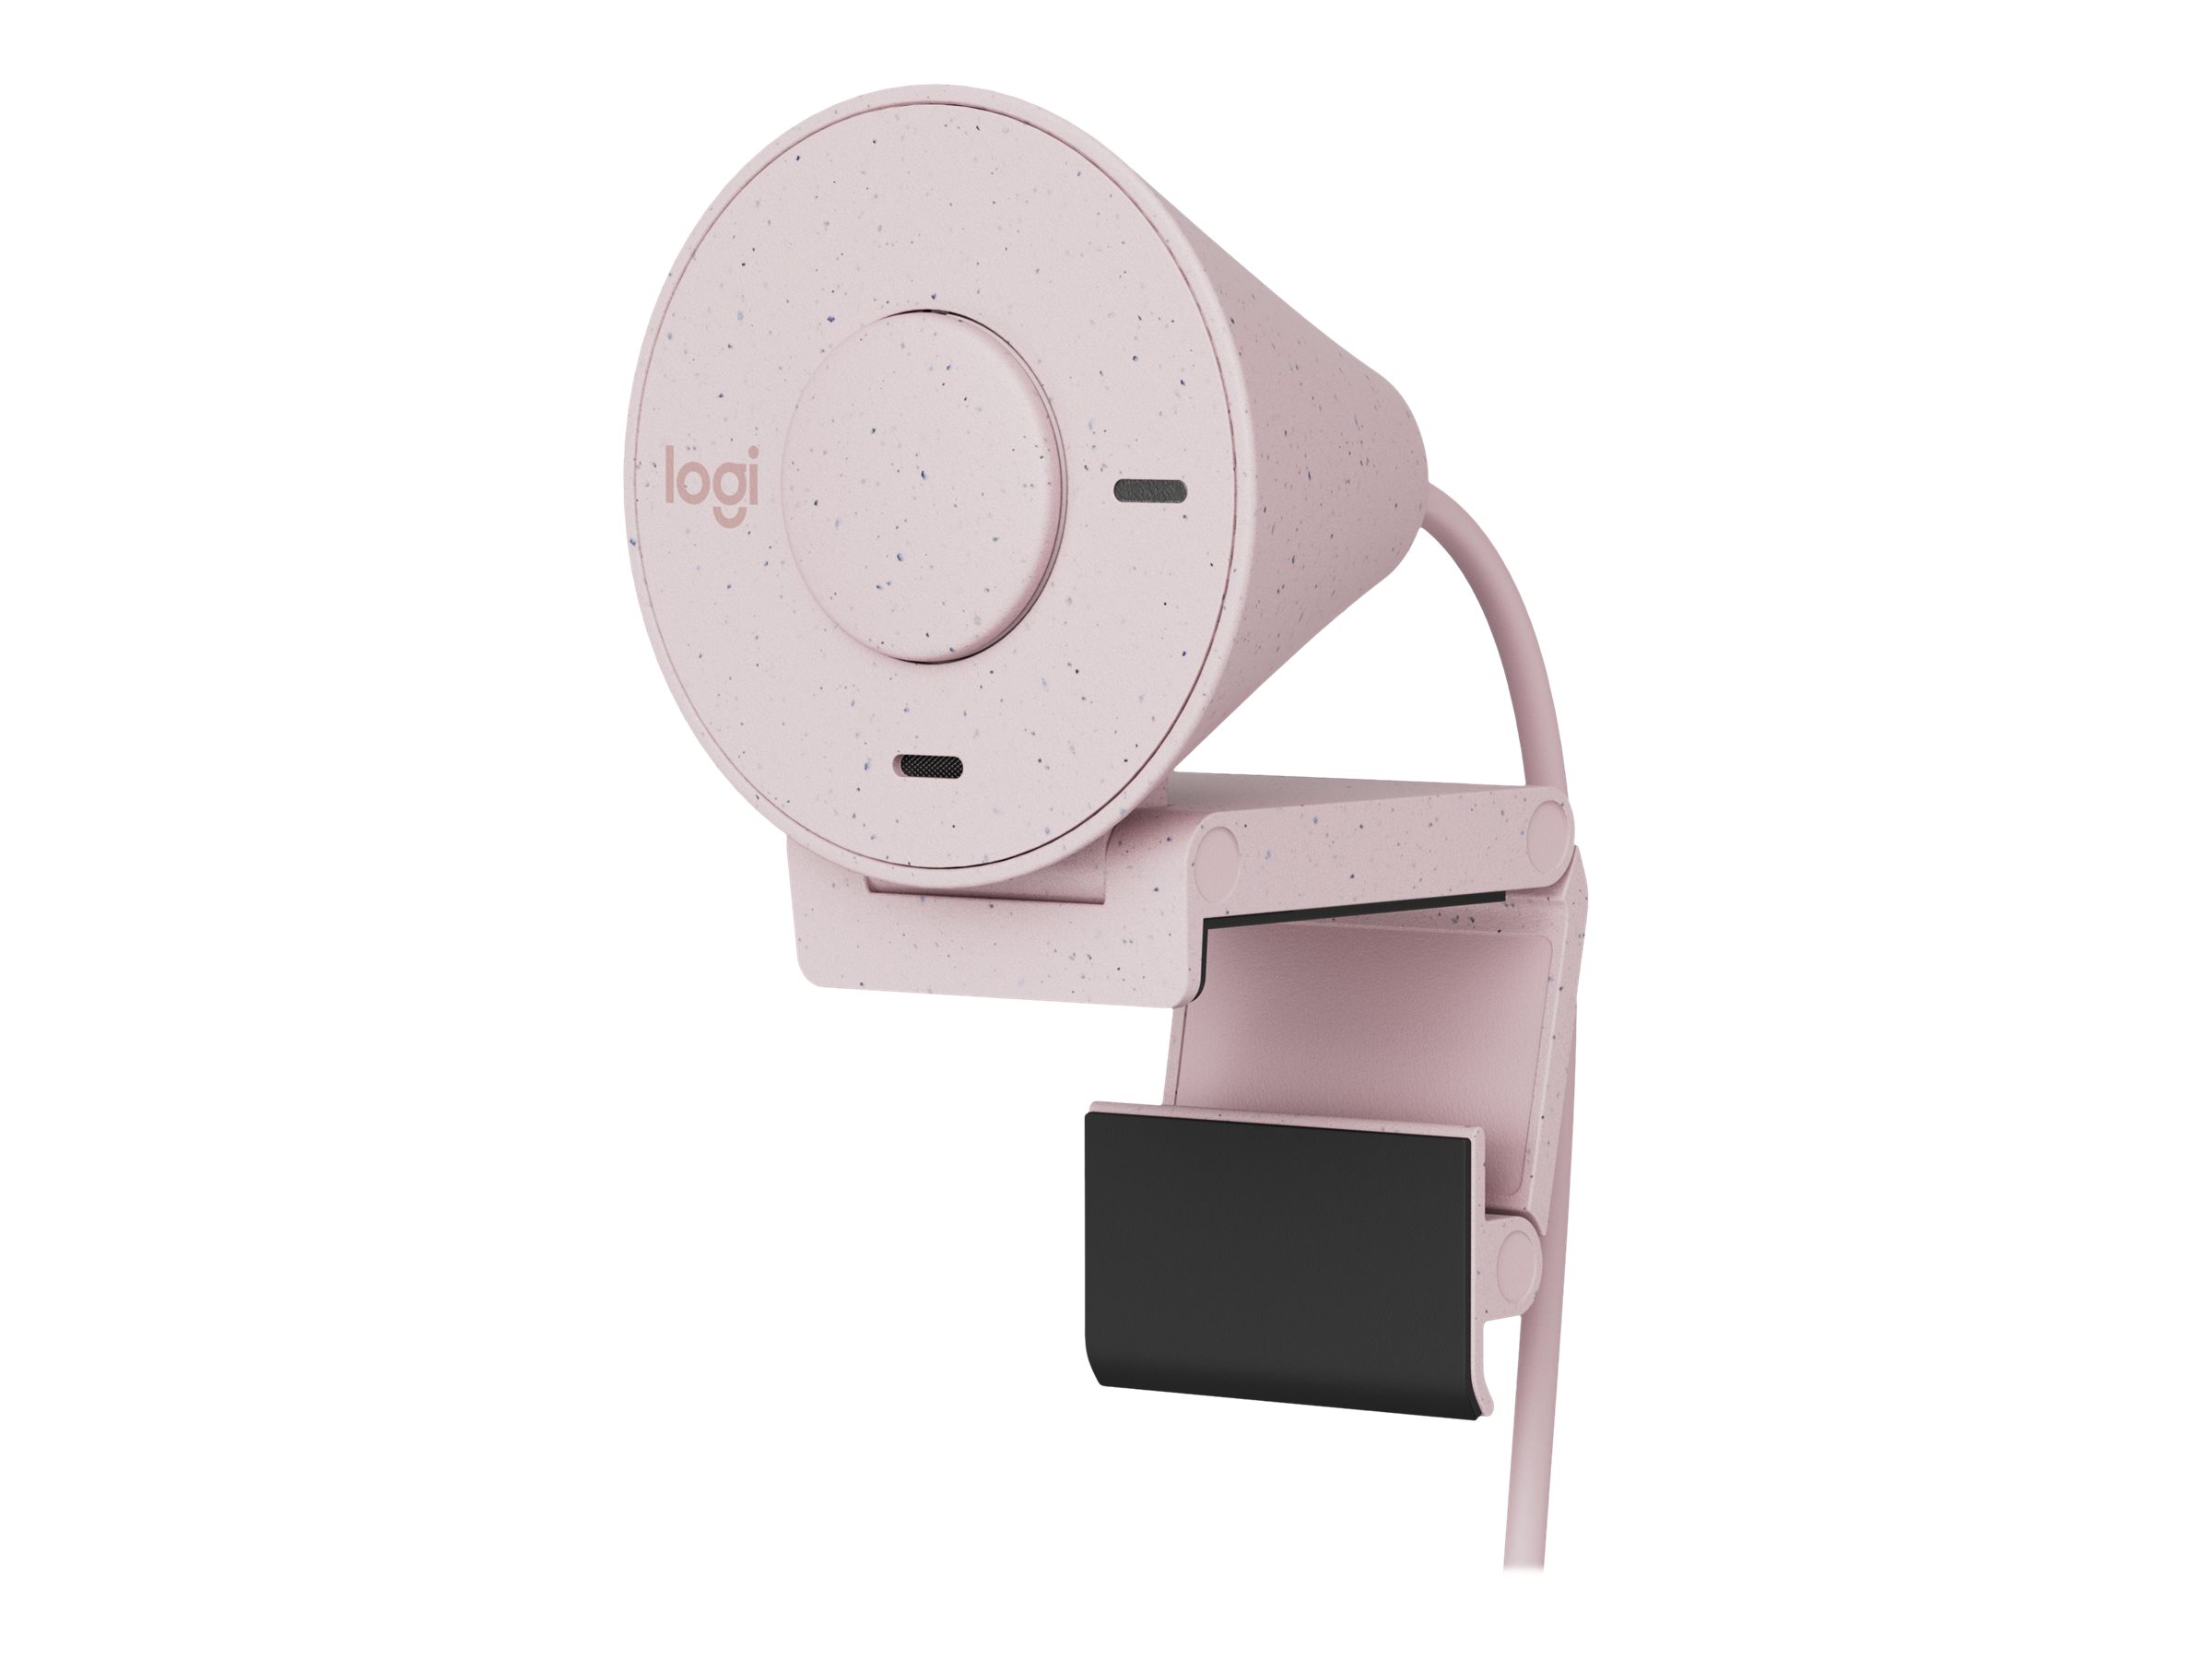 Logitech BRIO 300 - Webcam - Farbe - 2 MP - 1920 x 1080 - 720p, 1080p - Audio - USB-C